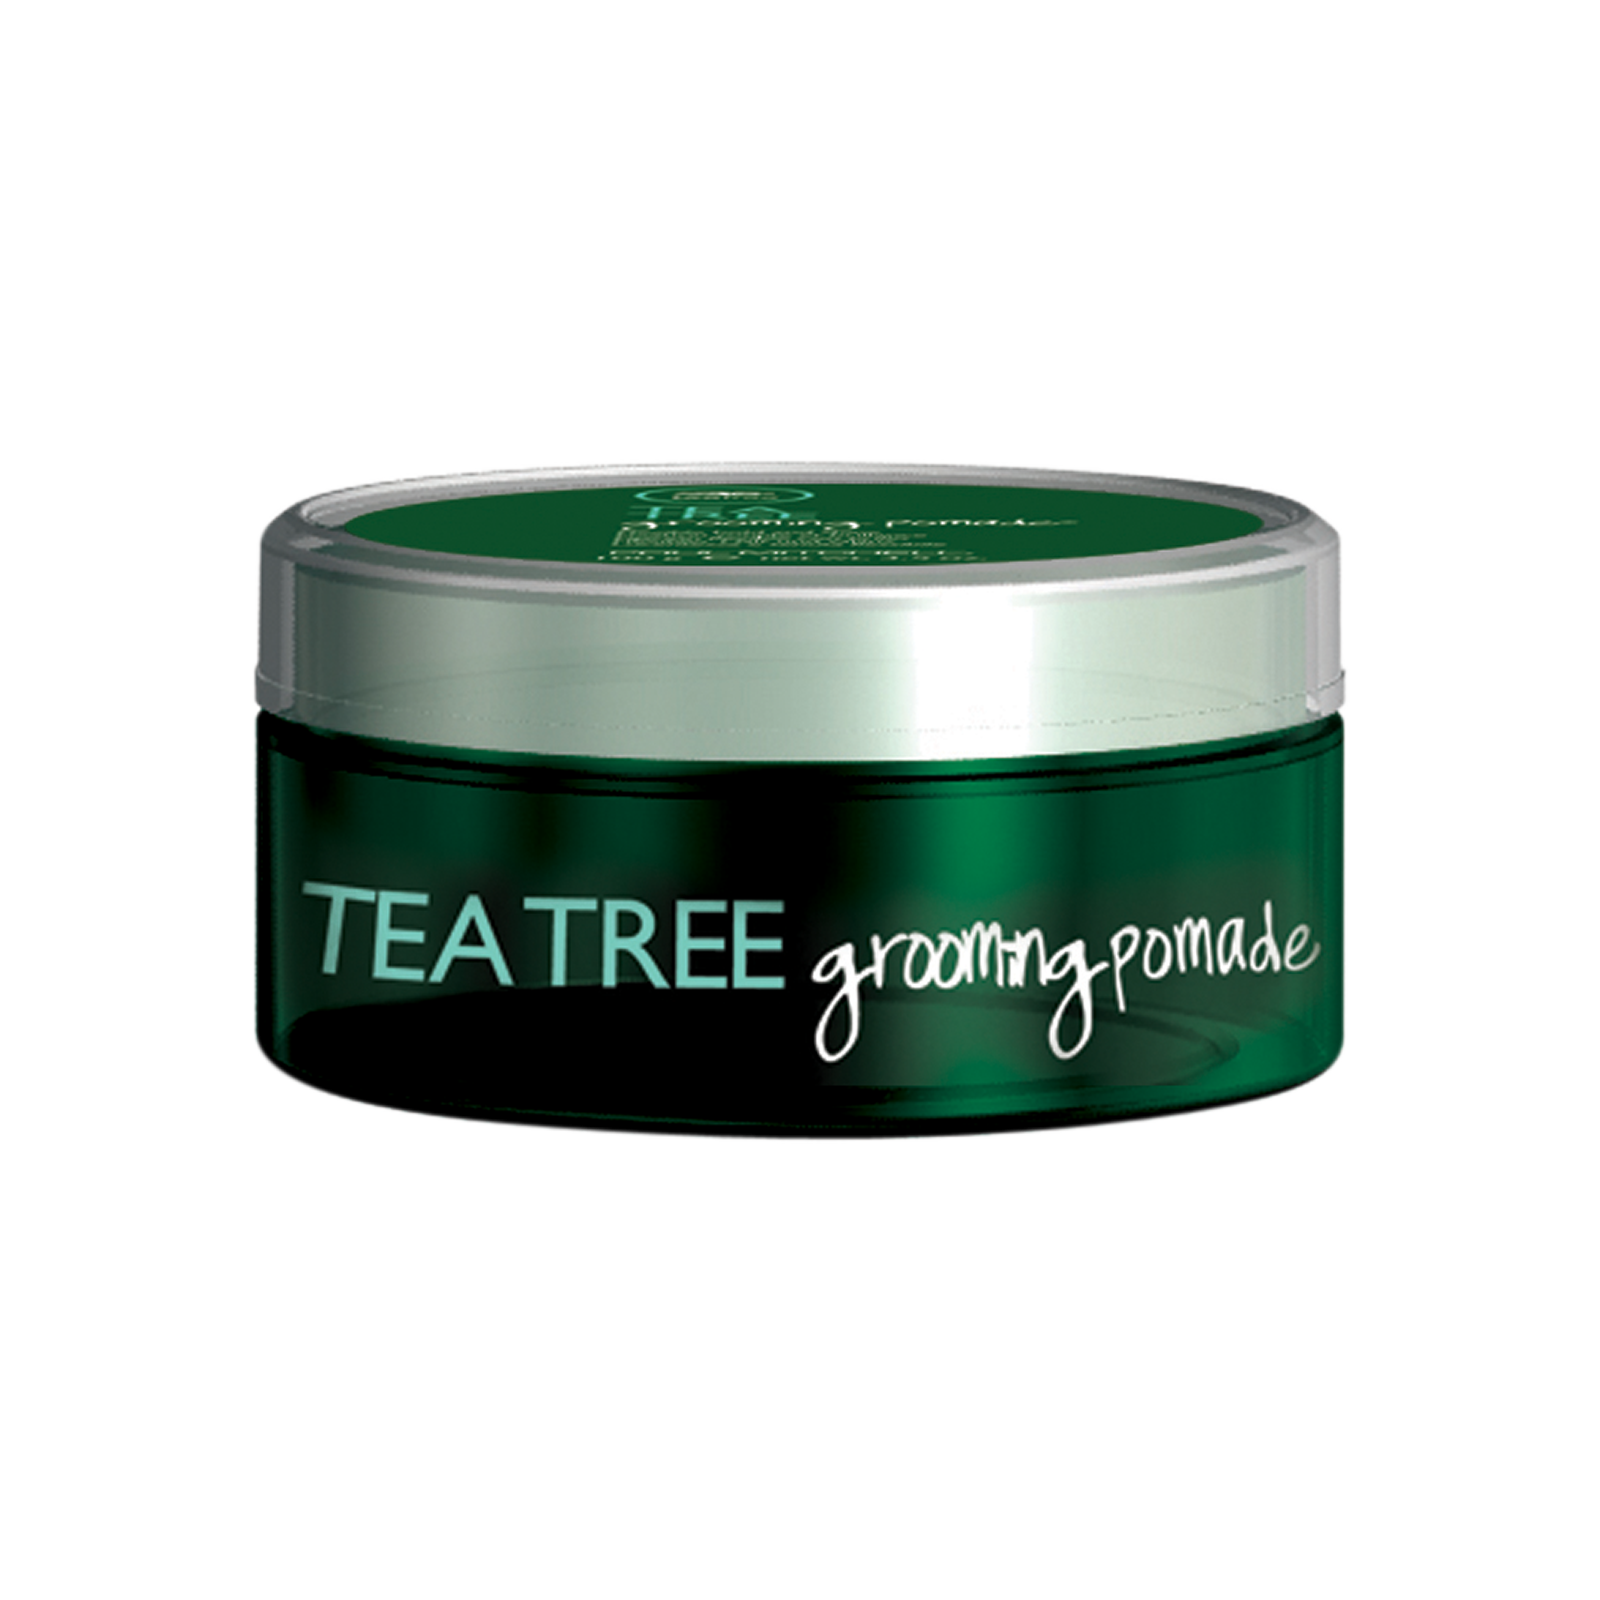 TEA TREE - Grooming Pomade - Hypnotic Store